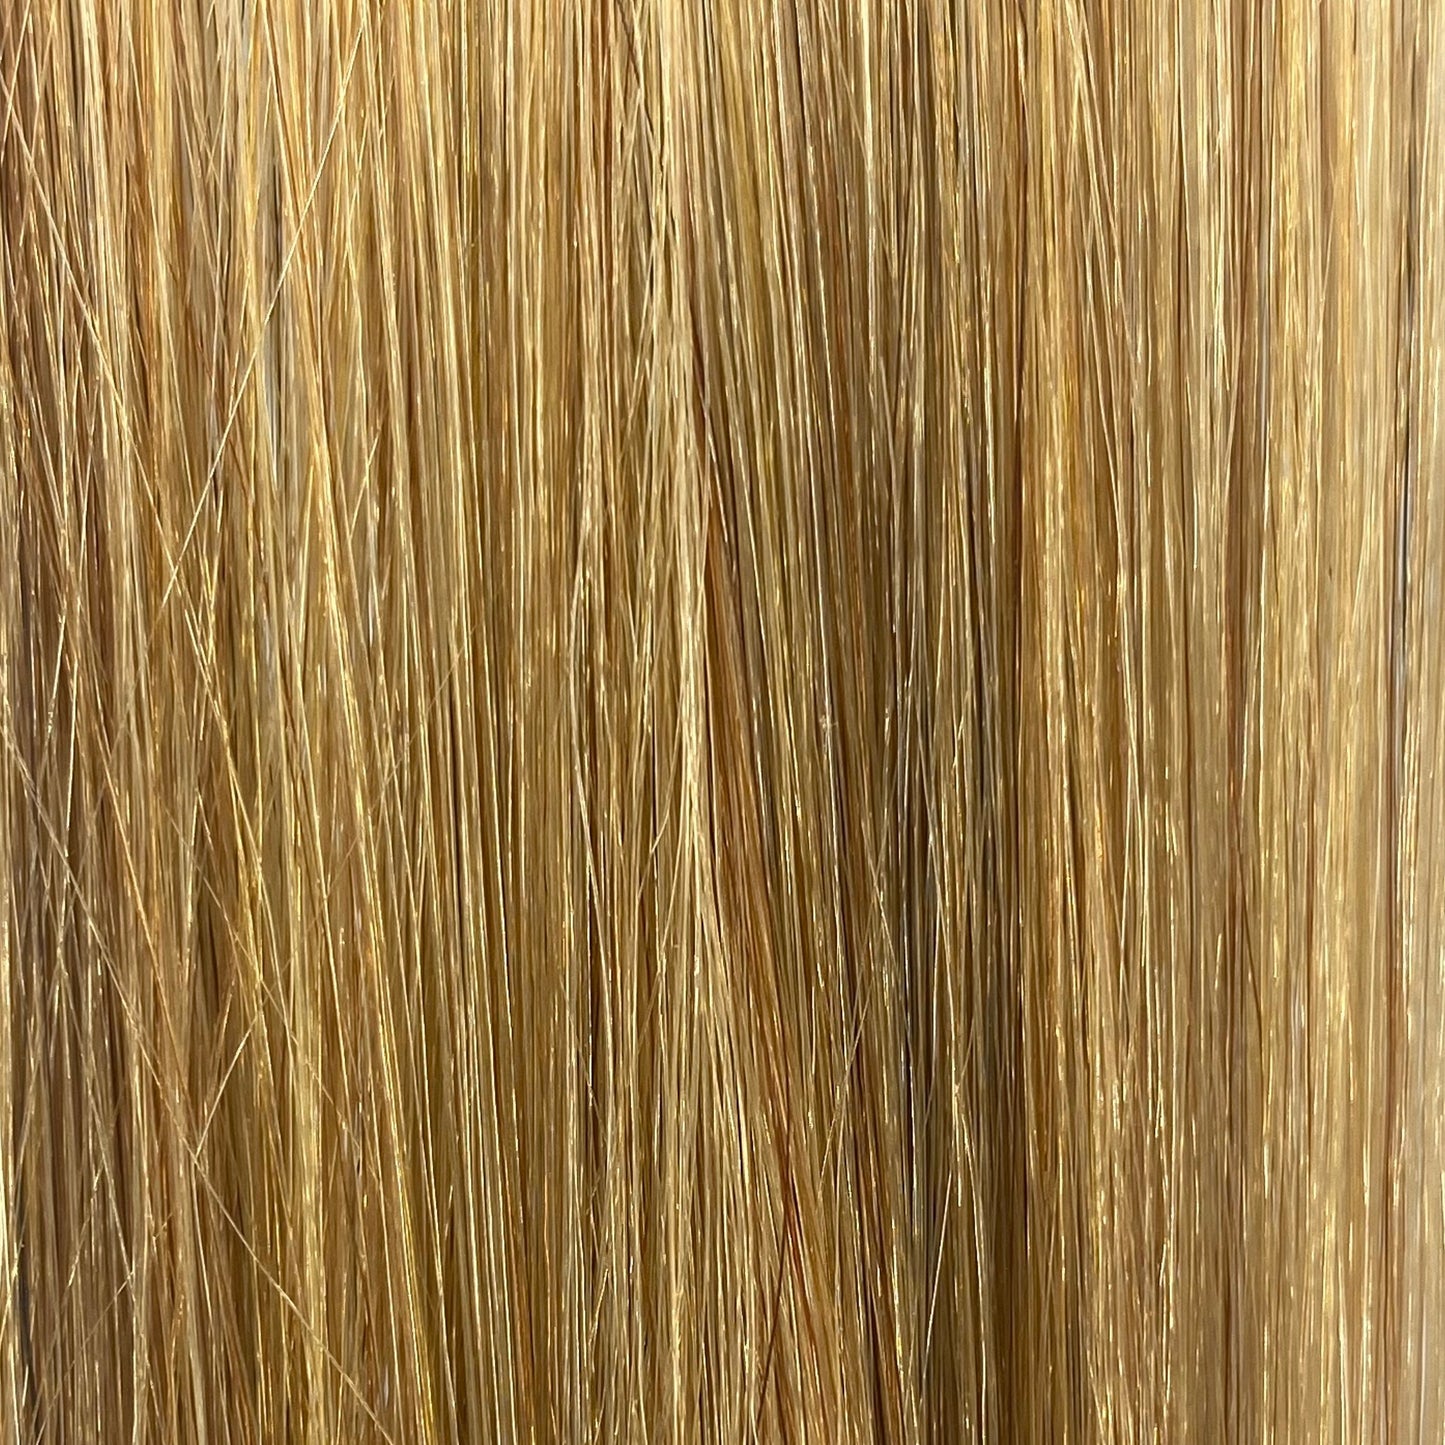 Fusion hair extensions #DB4 - 40cm/16 inches - Dark Golden Blonde Fusion Euro So Cap 